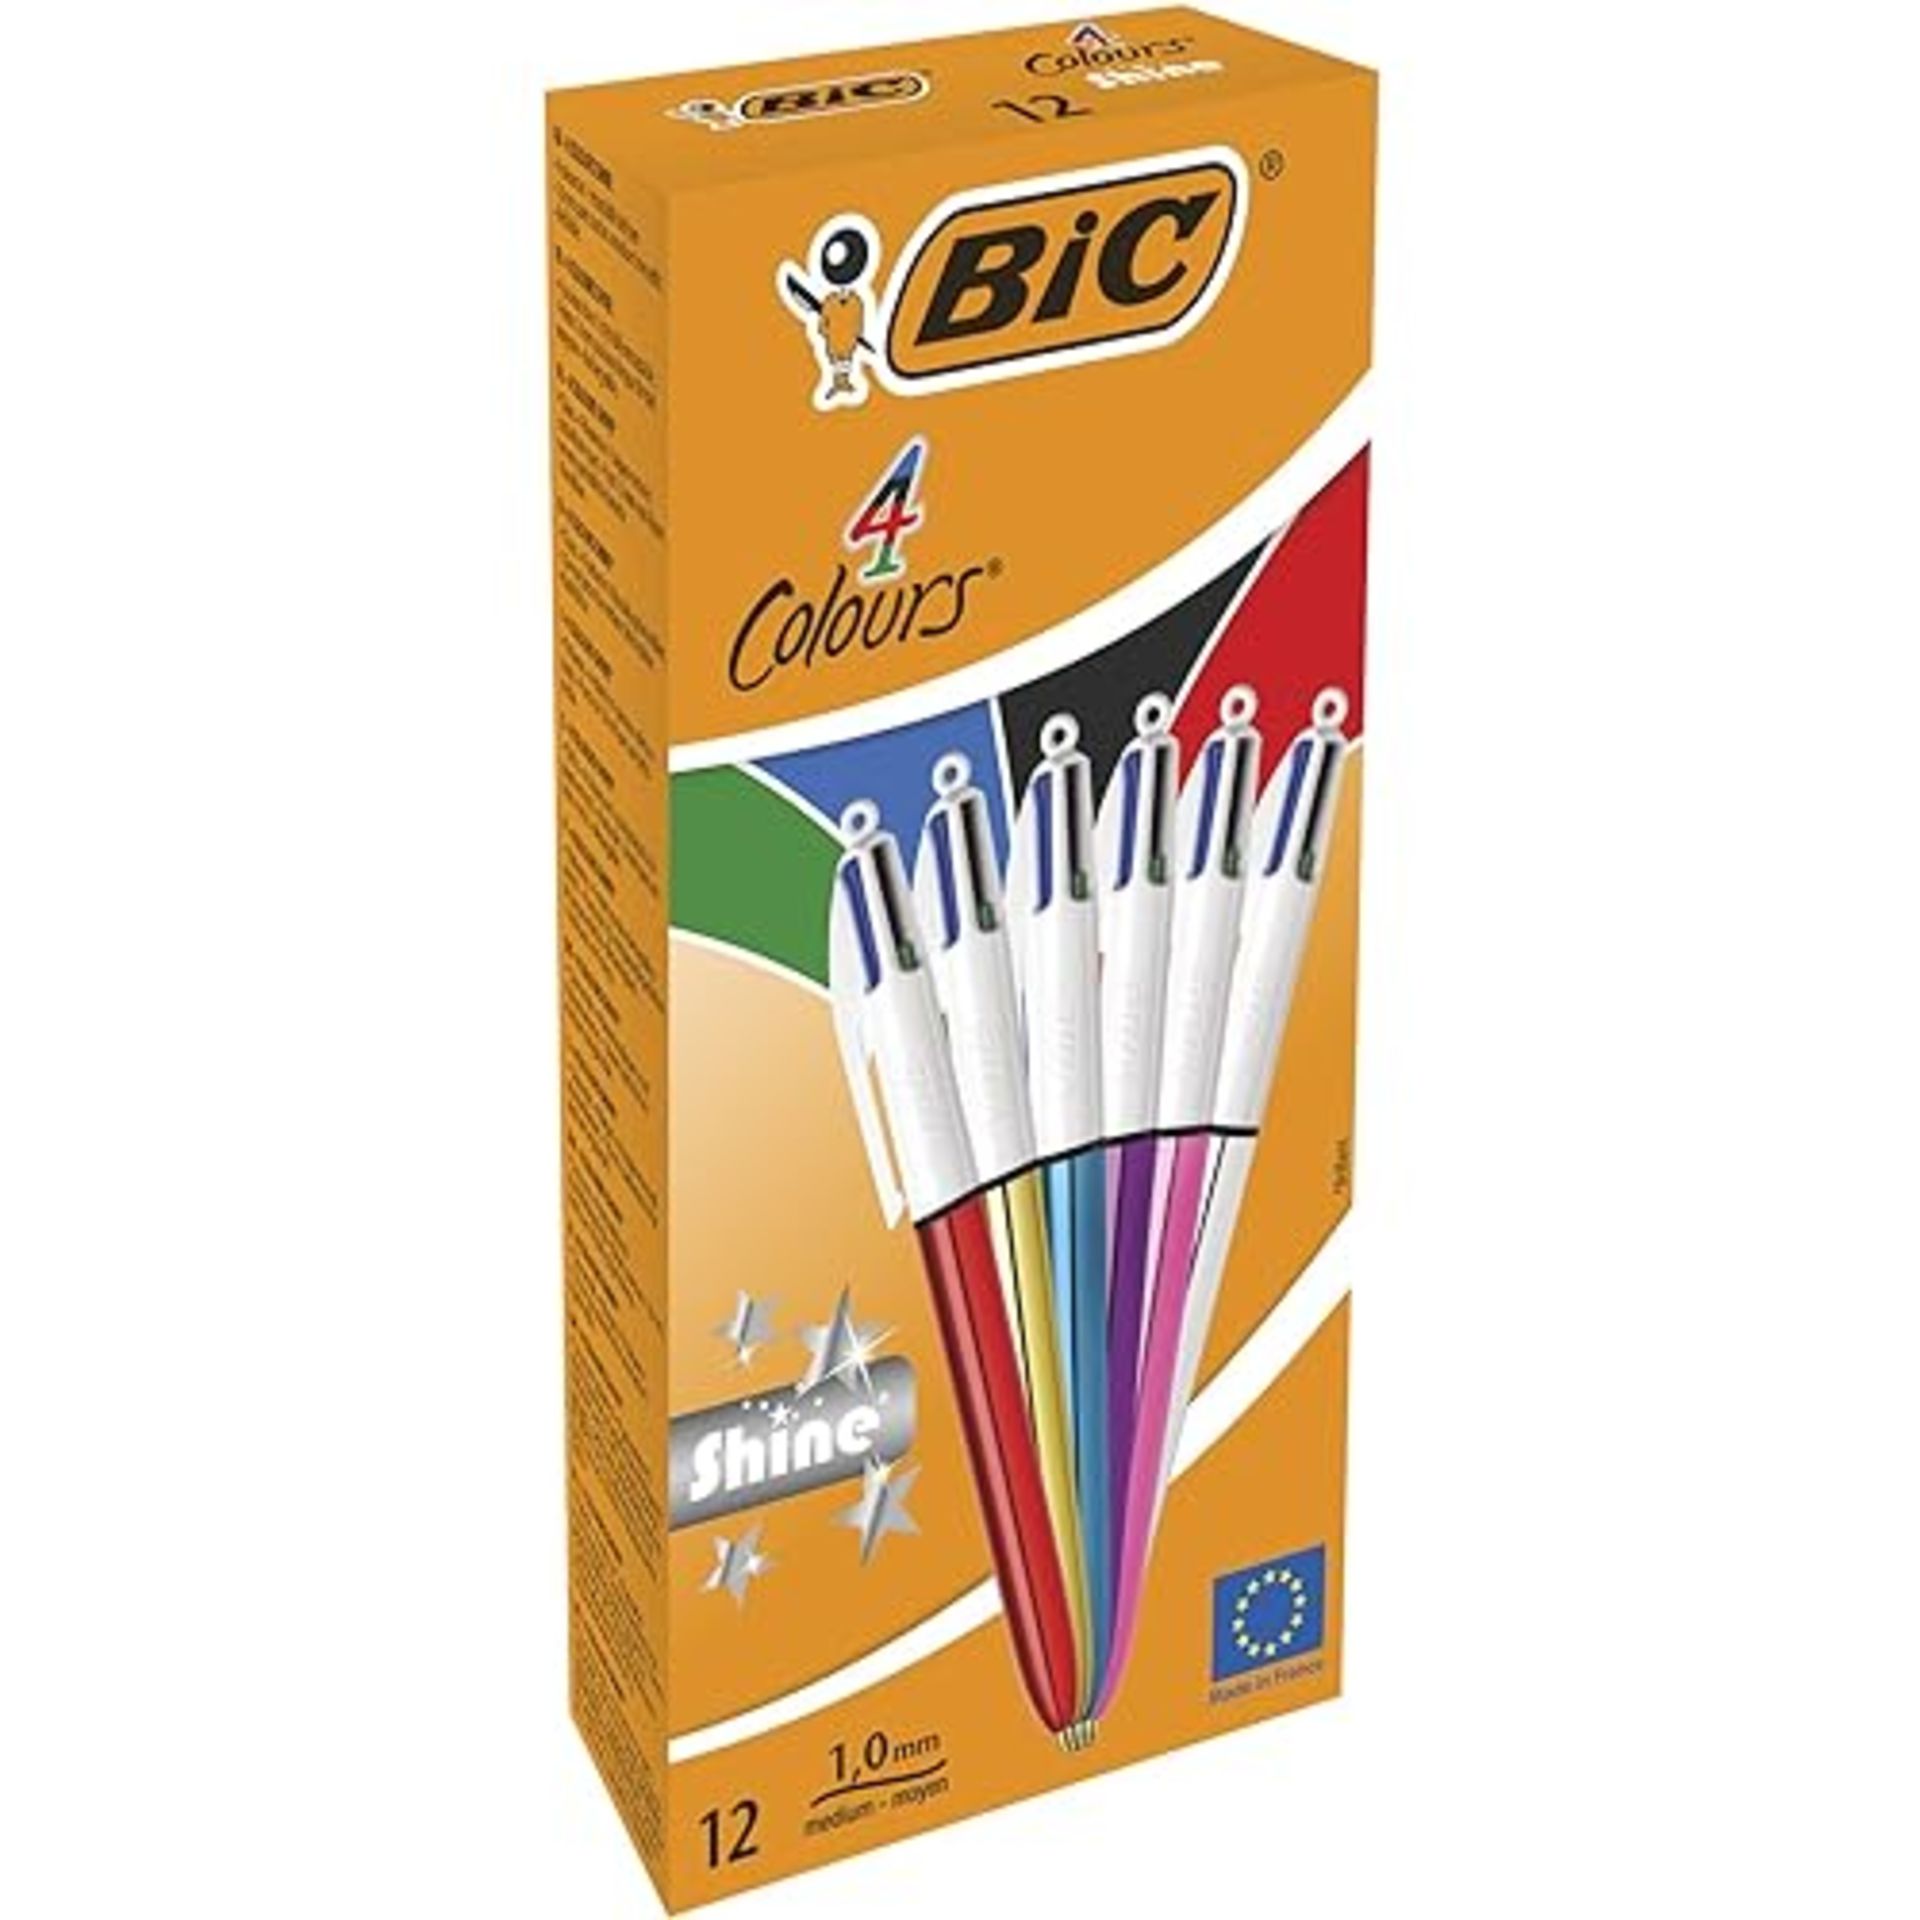 BIC 4 Colours Shine Retractable Ballpoint Pens, Medium Point (1.0 mm) - Assorted Metallic Barrels, 